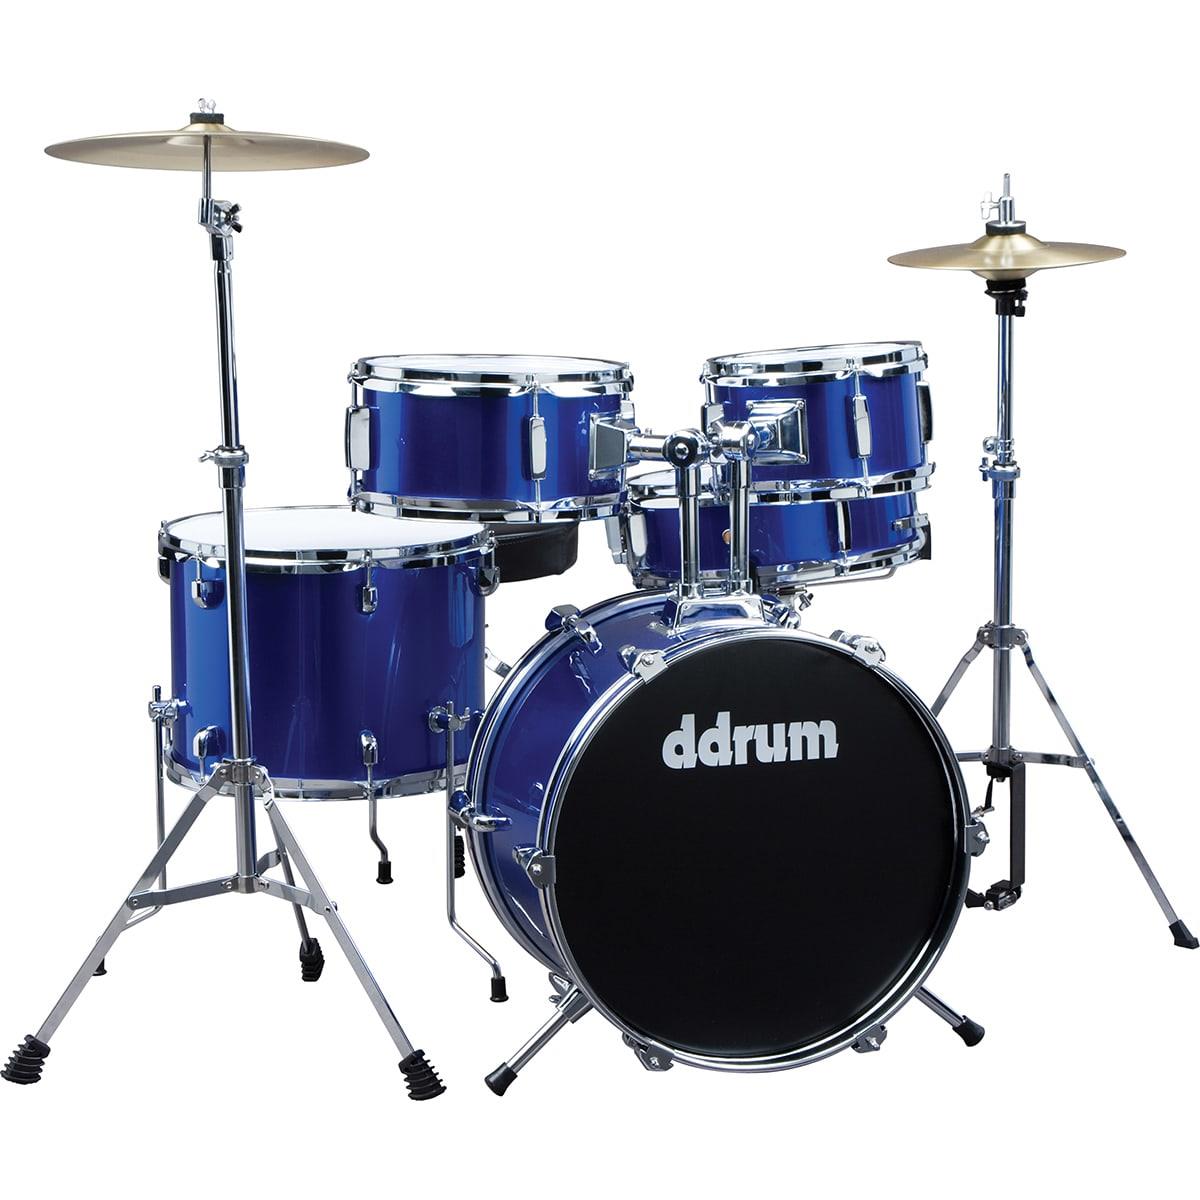 Dean Guitars D1 Junior Complete Drum Set with Cymbals, Police Blue -  D1 PB